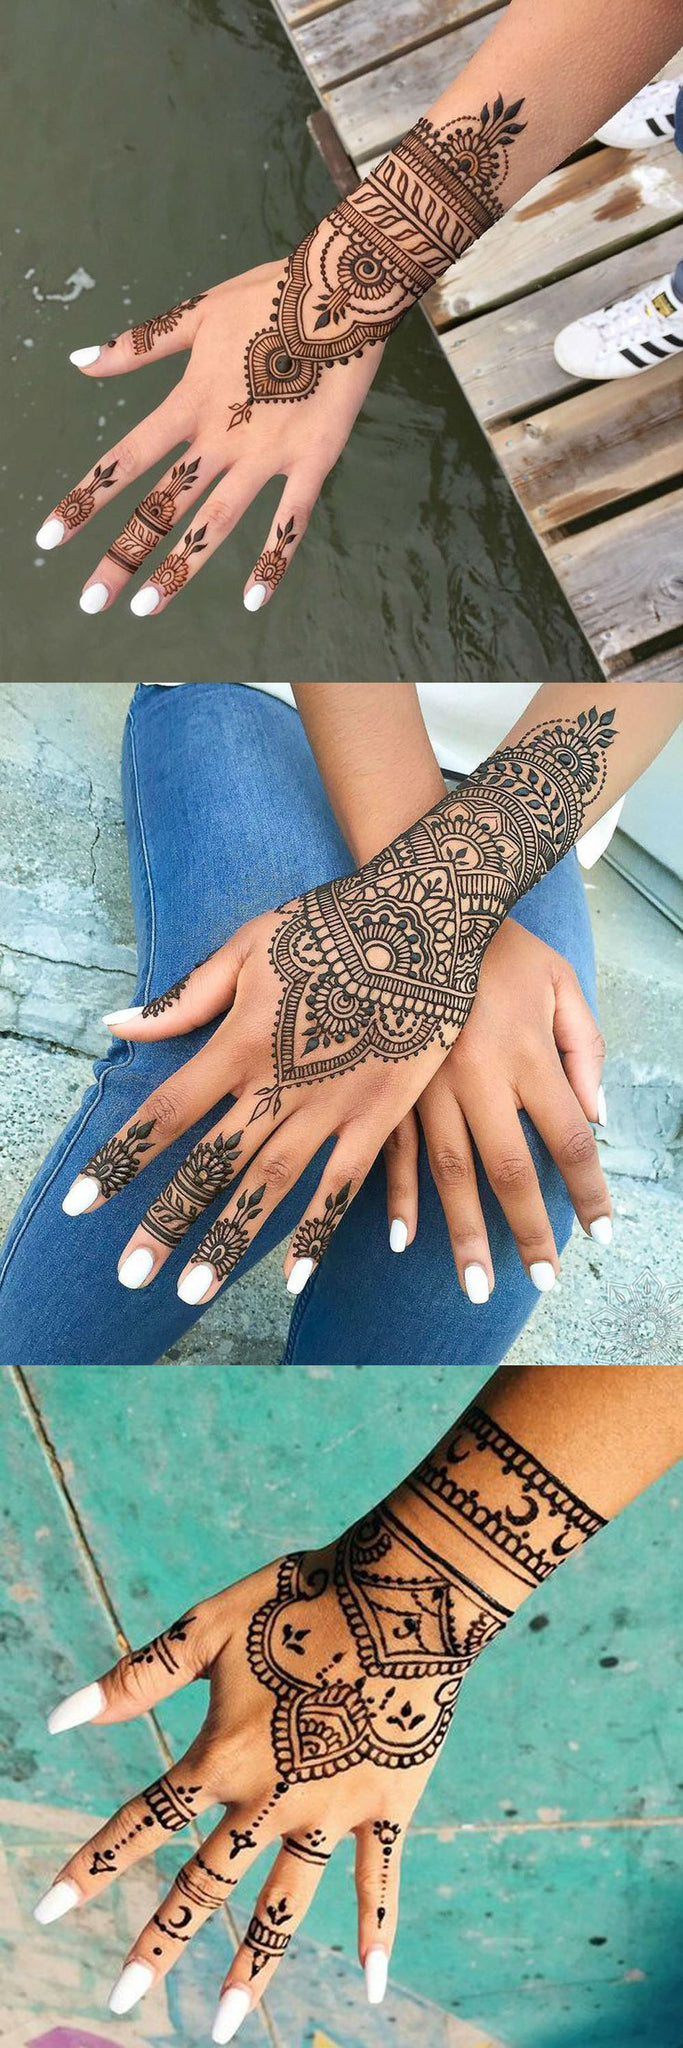 Black Hand Henna Mandala Tattoo Design Ideas with Meaning for Women -  mano Ideas de tatuaje con significado para las mujeres - www.MyBodiArt.com